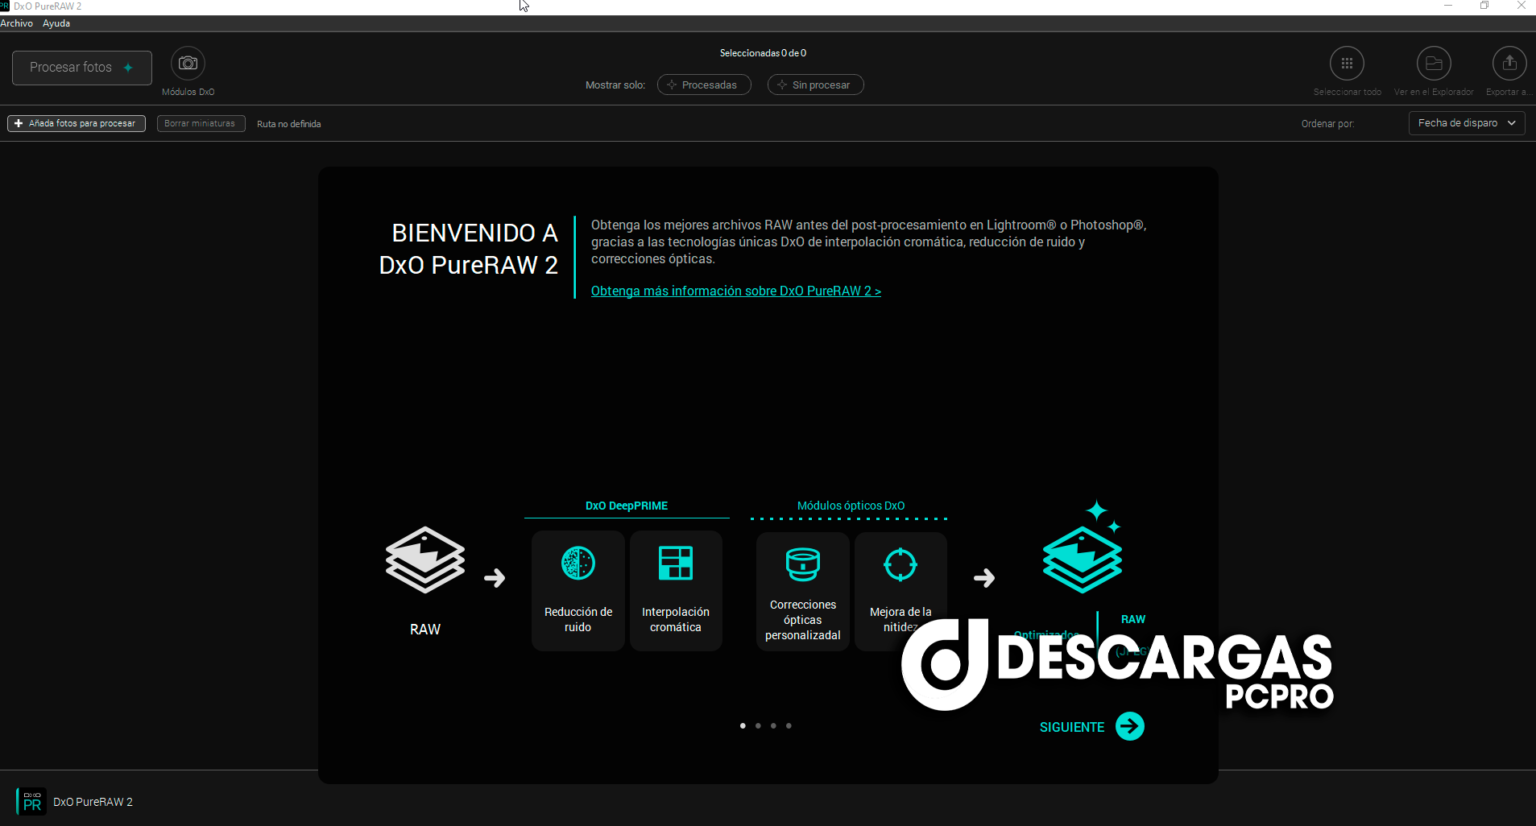 downloading DxO PureRAW 3.6.2.26